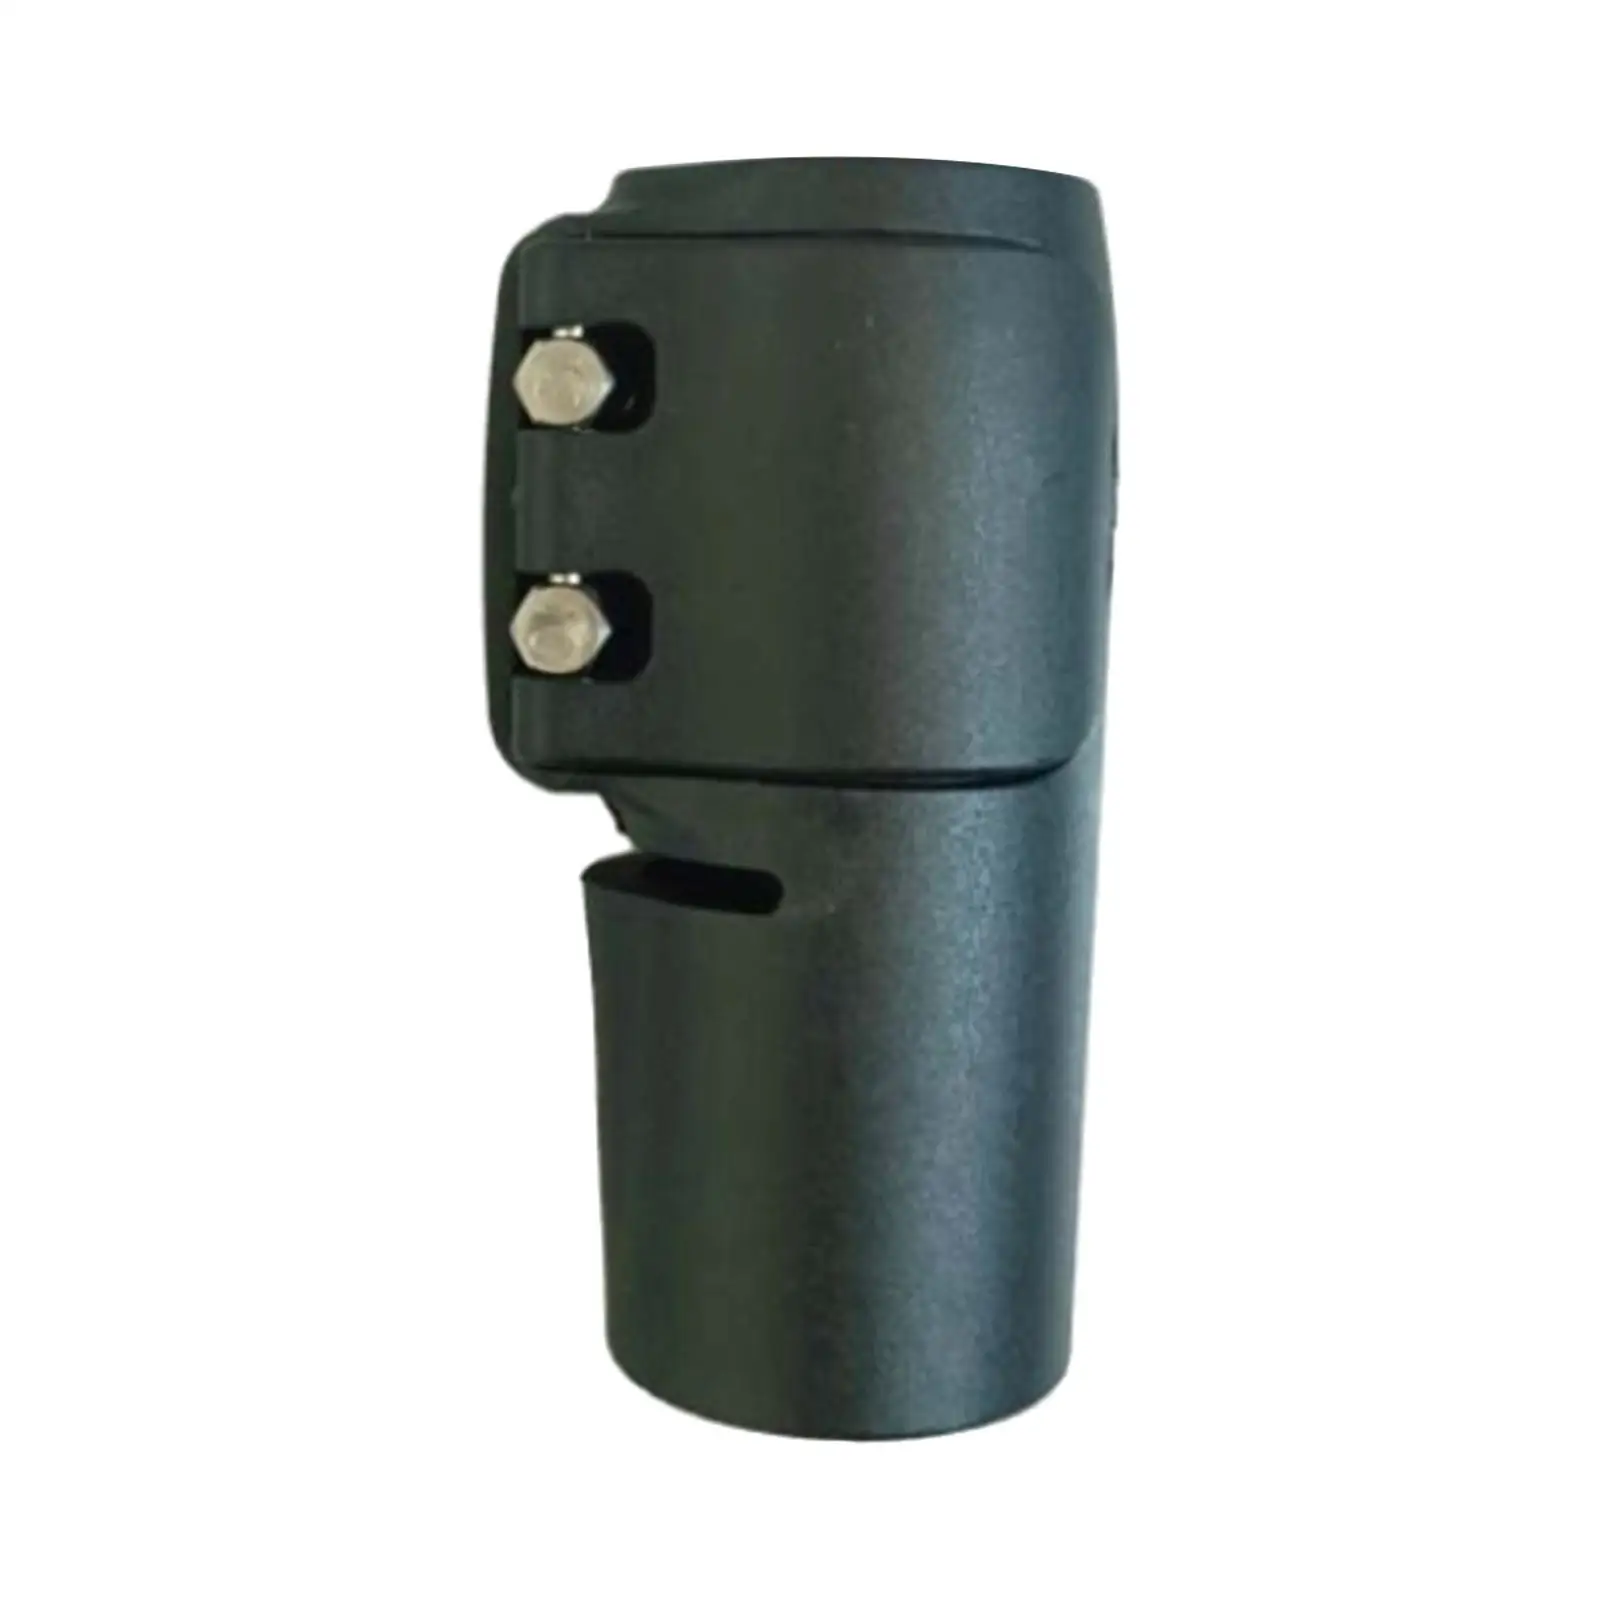 Nylon 26mm Paddle Shaft Clamp Adjuster Clip Accessories for Adjusting Length